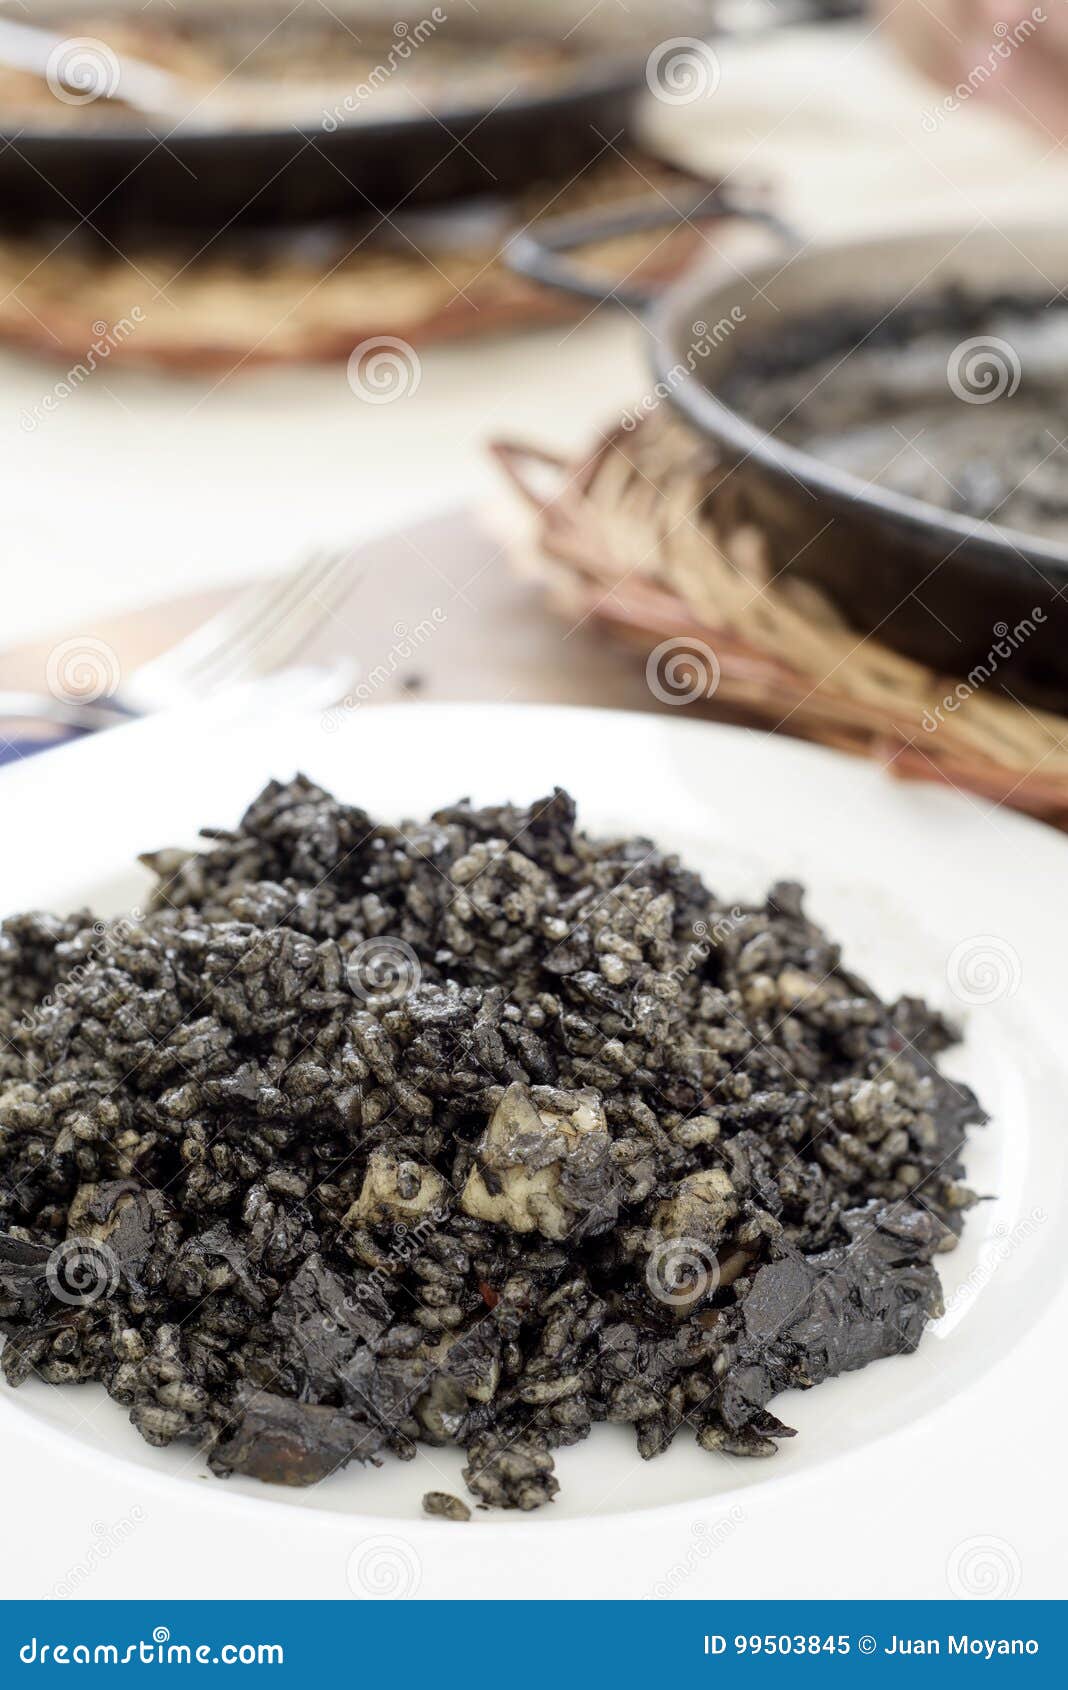 spanish arroz negro or black paella